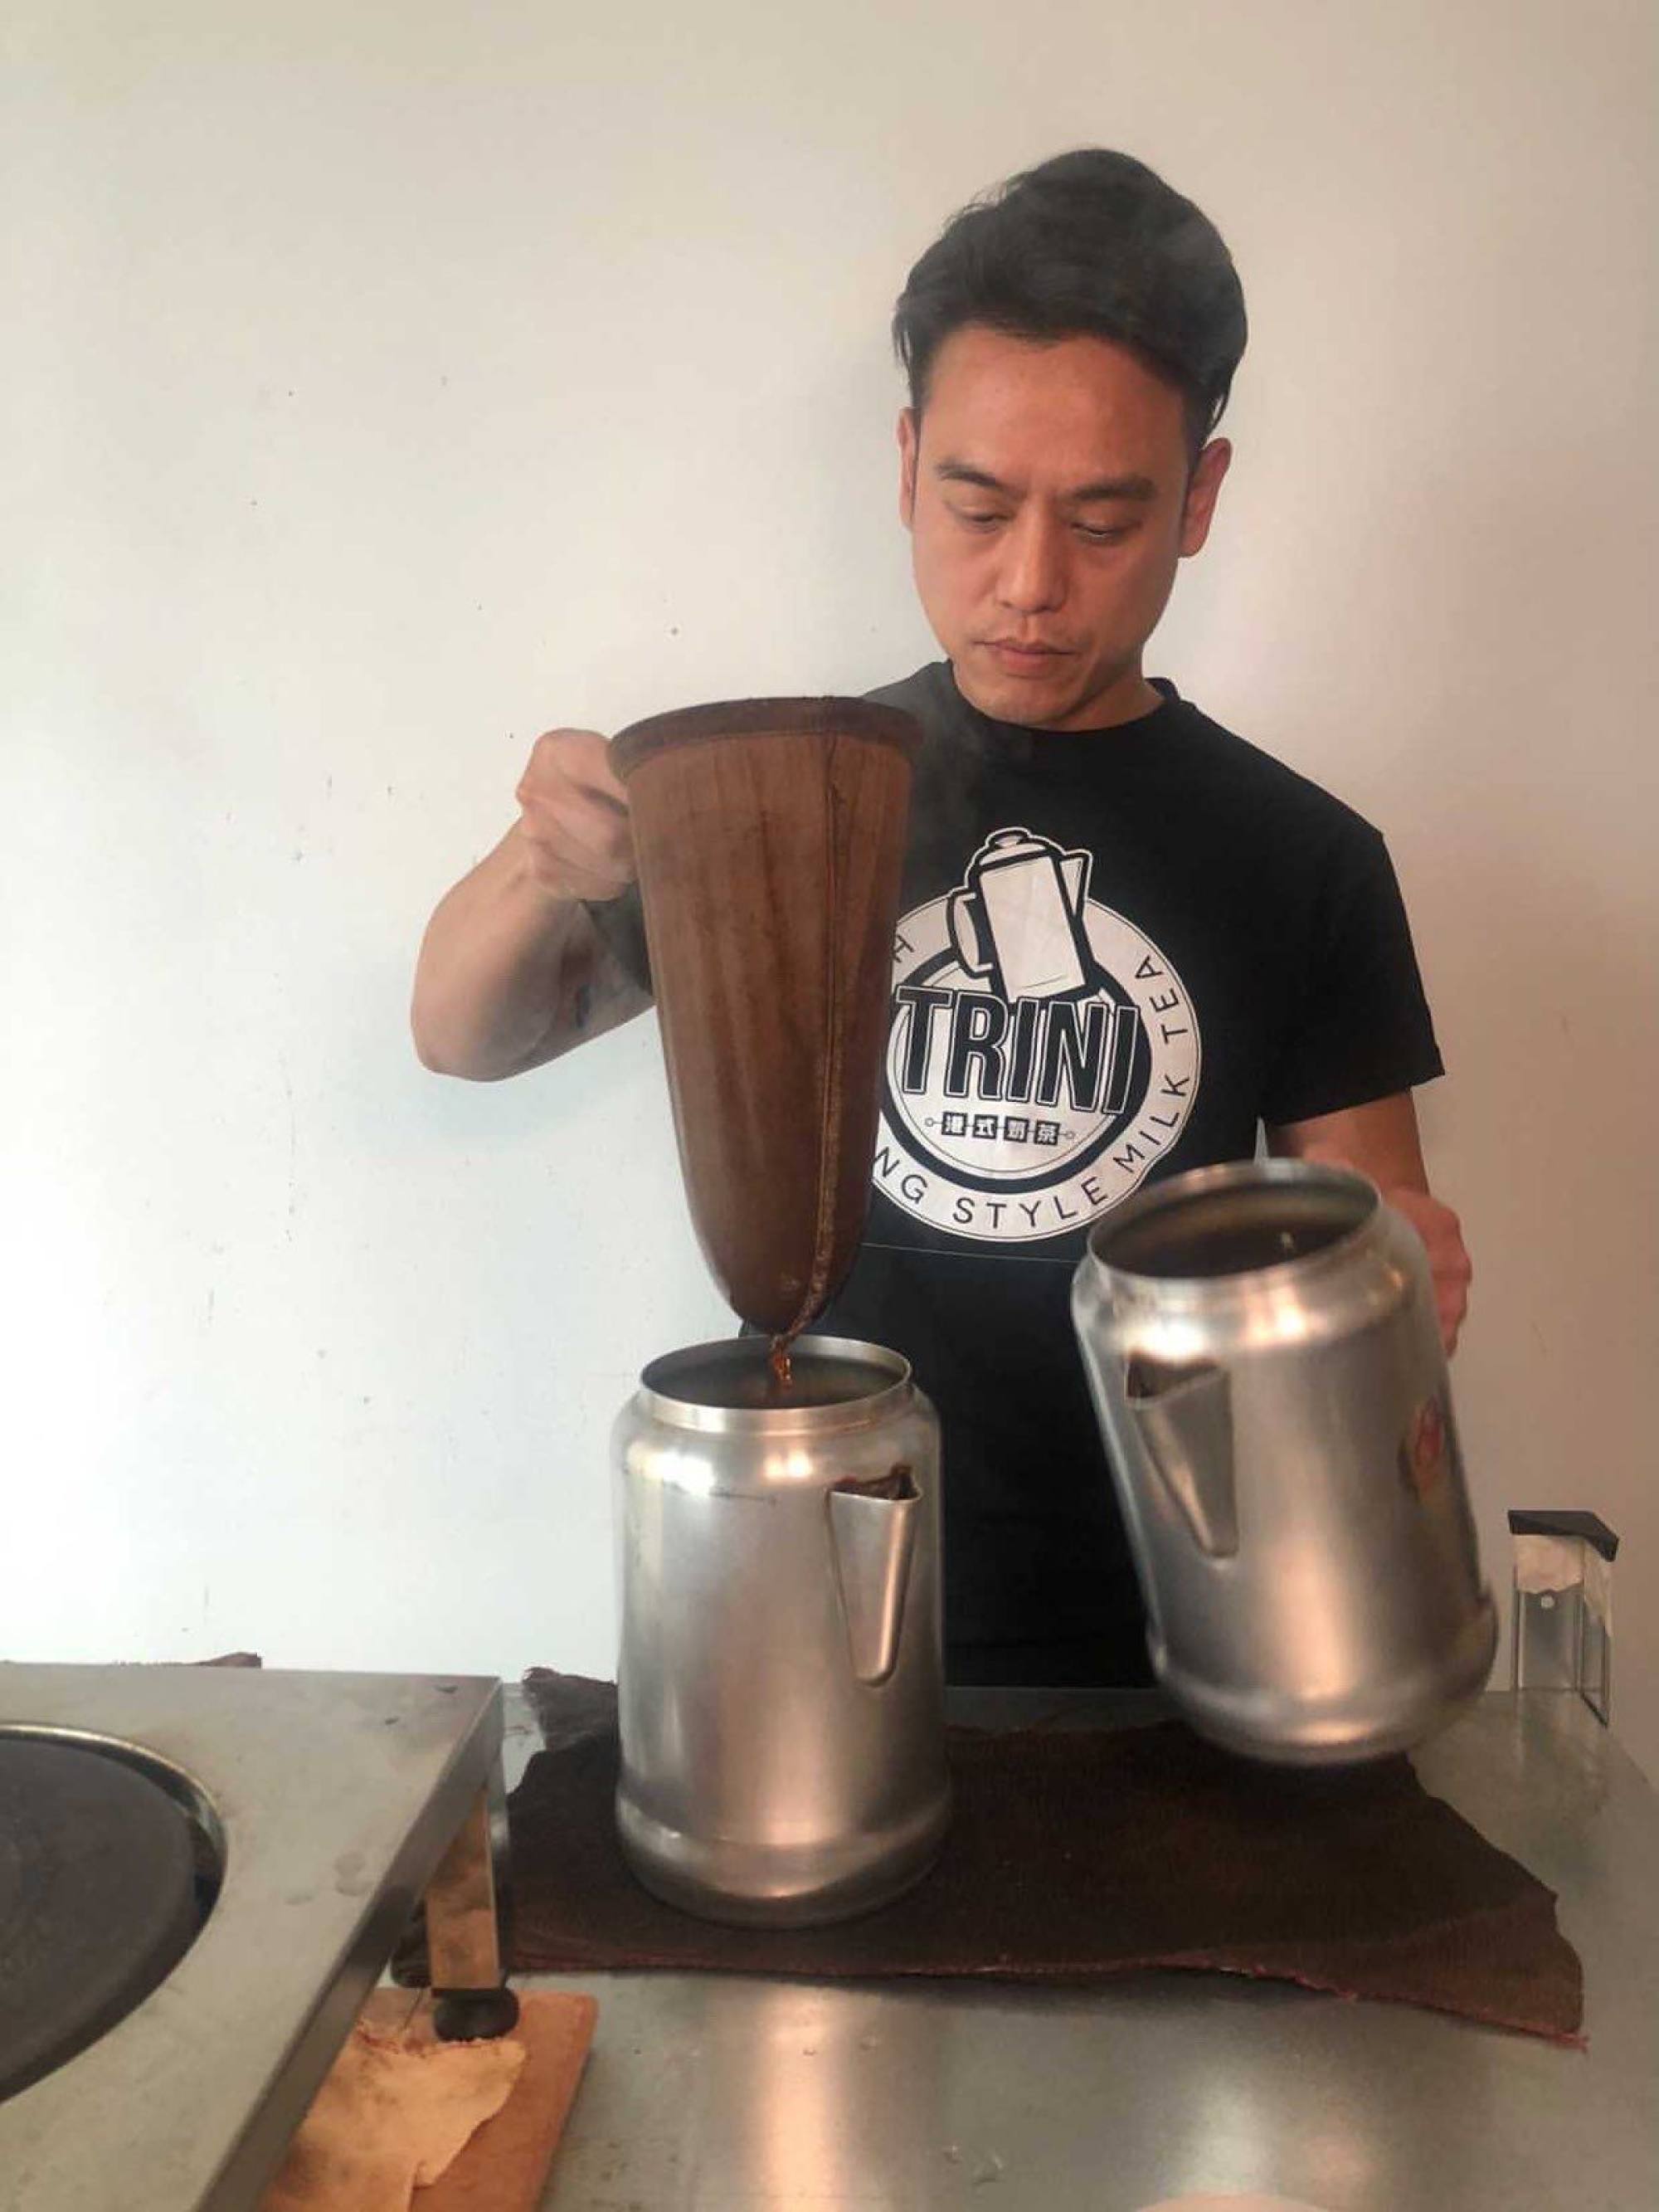 Eric Wong has started a business called Trini Hong Kong Style Milk Tea. Photo: Handout